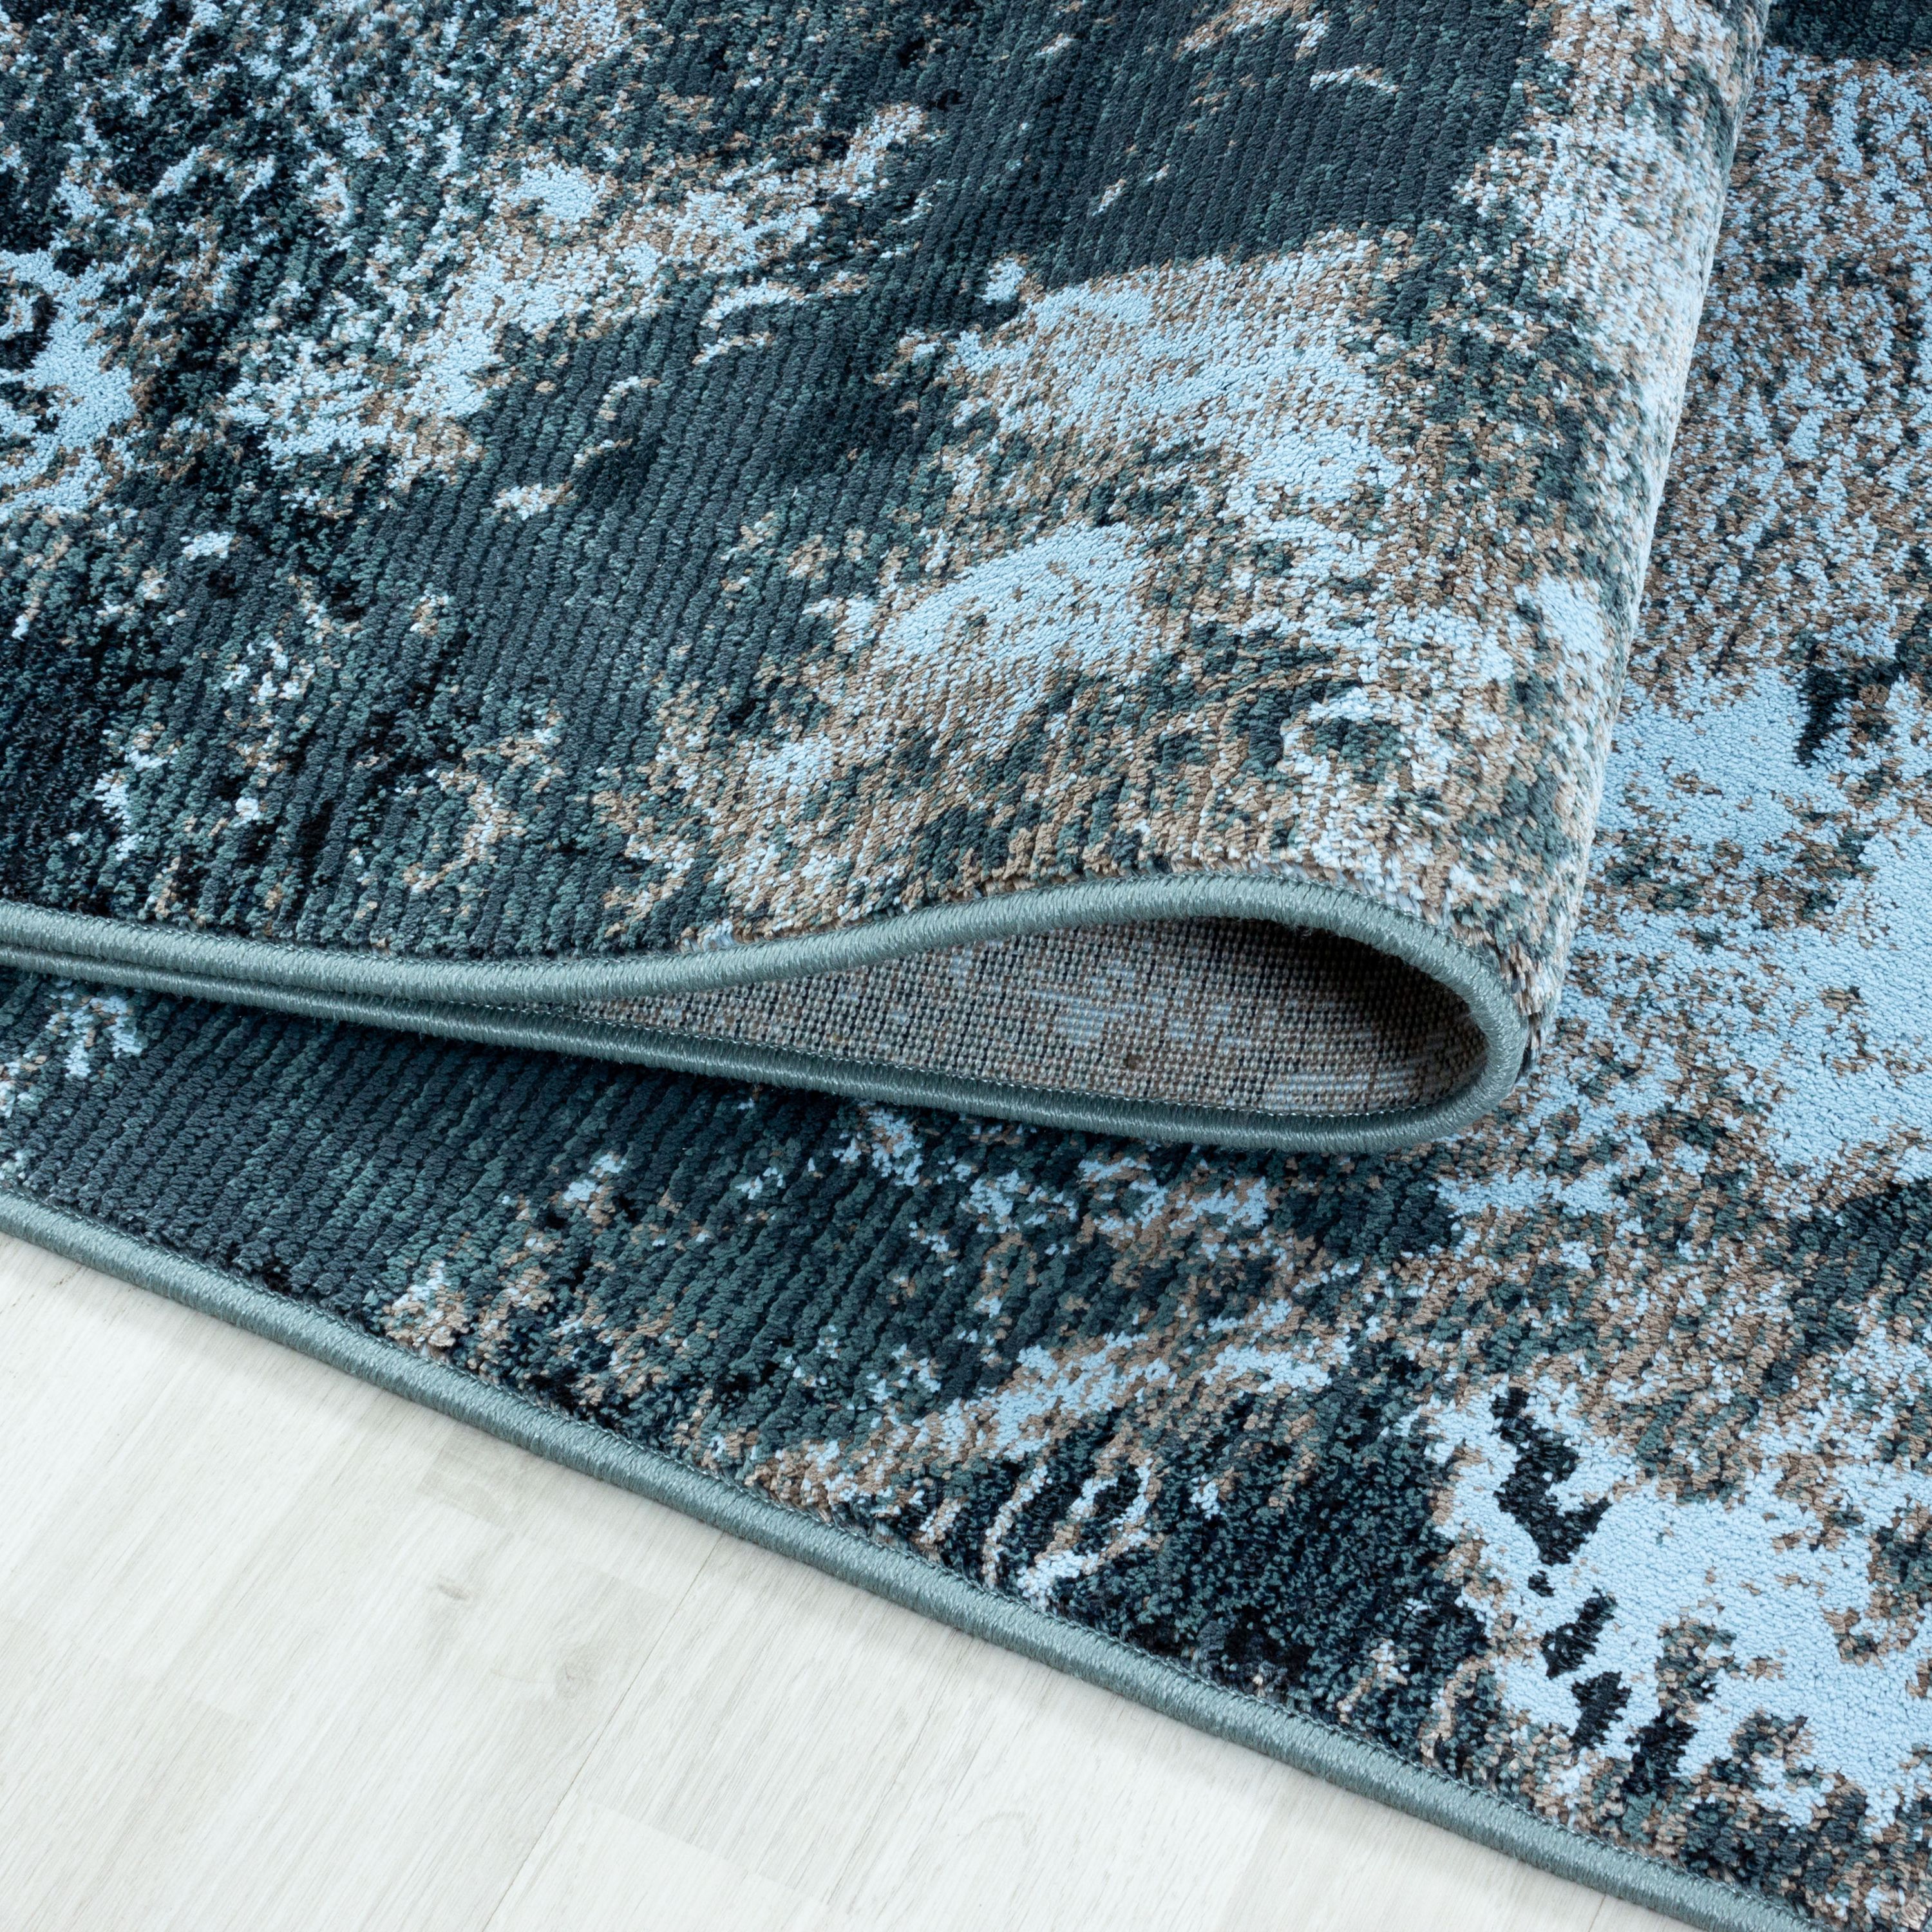 Kurzflor Design Teppich GRETA 100% Recycled Polyester Vintage Design Kachel